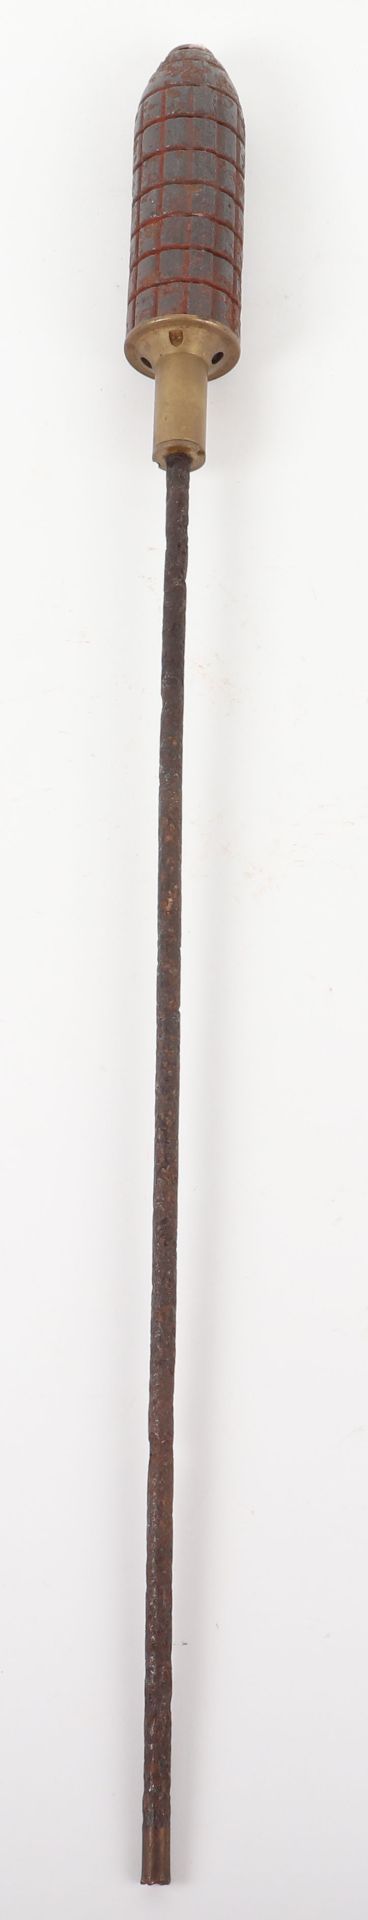 Inert WW1 German M-13 Rifle Grenade - Image 4 of 5